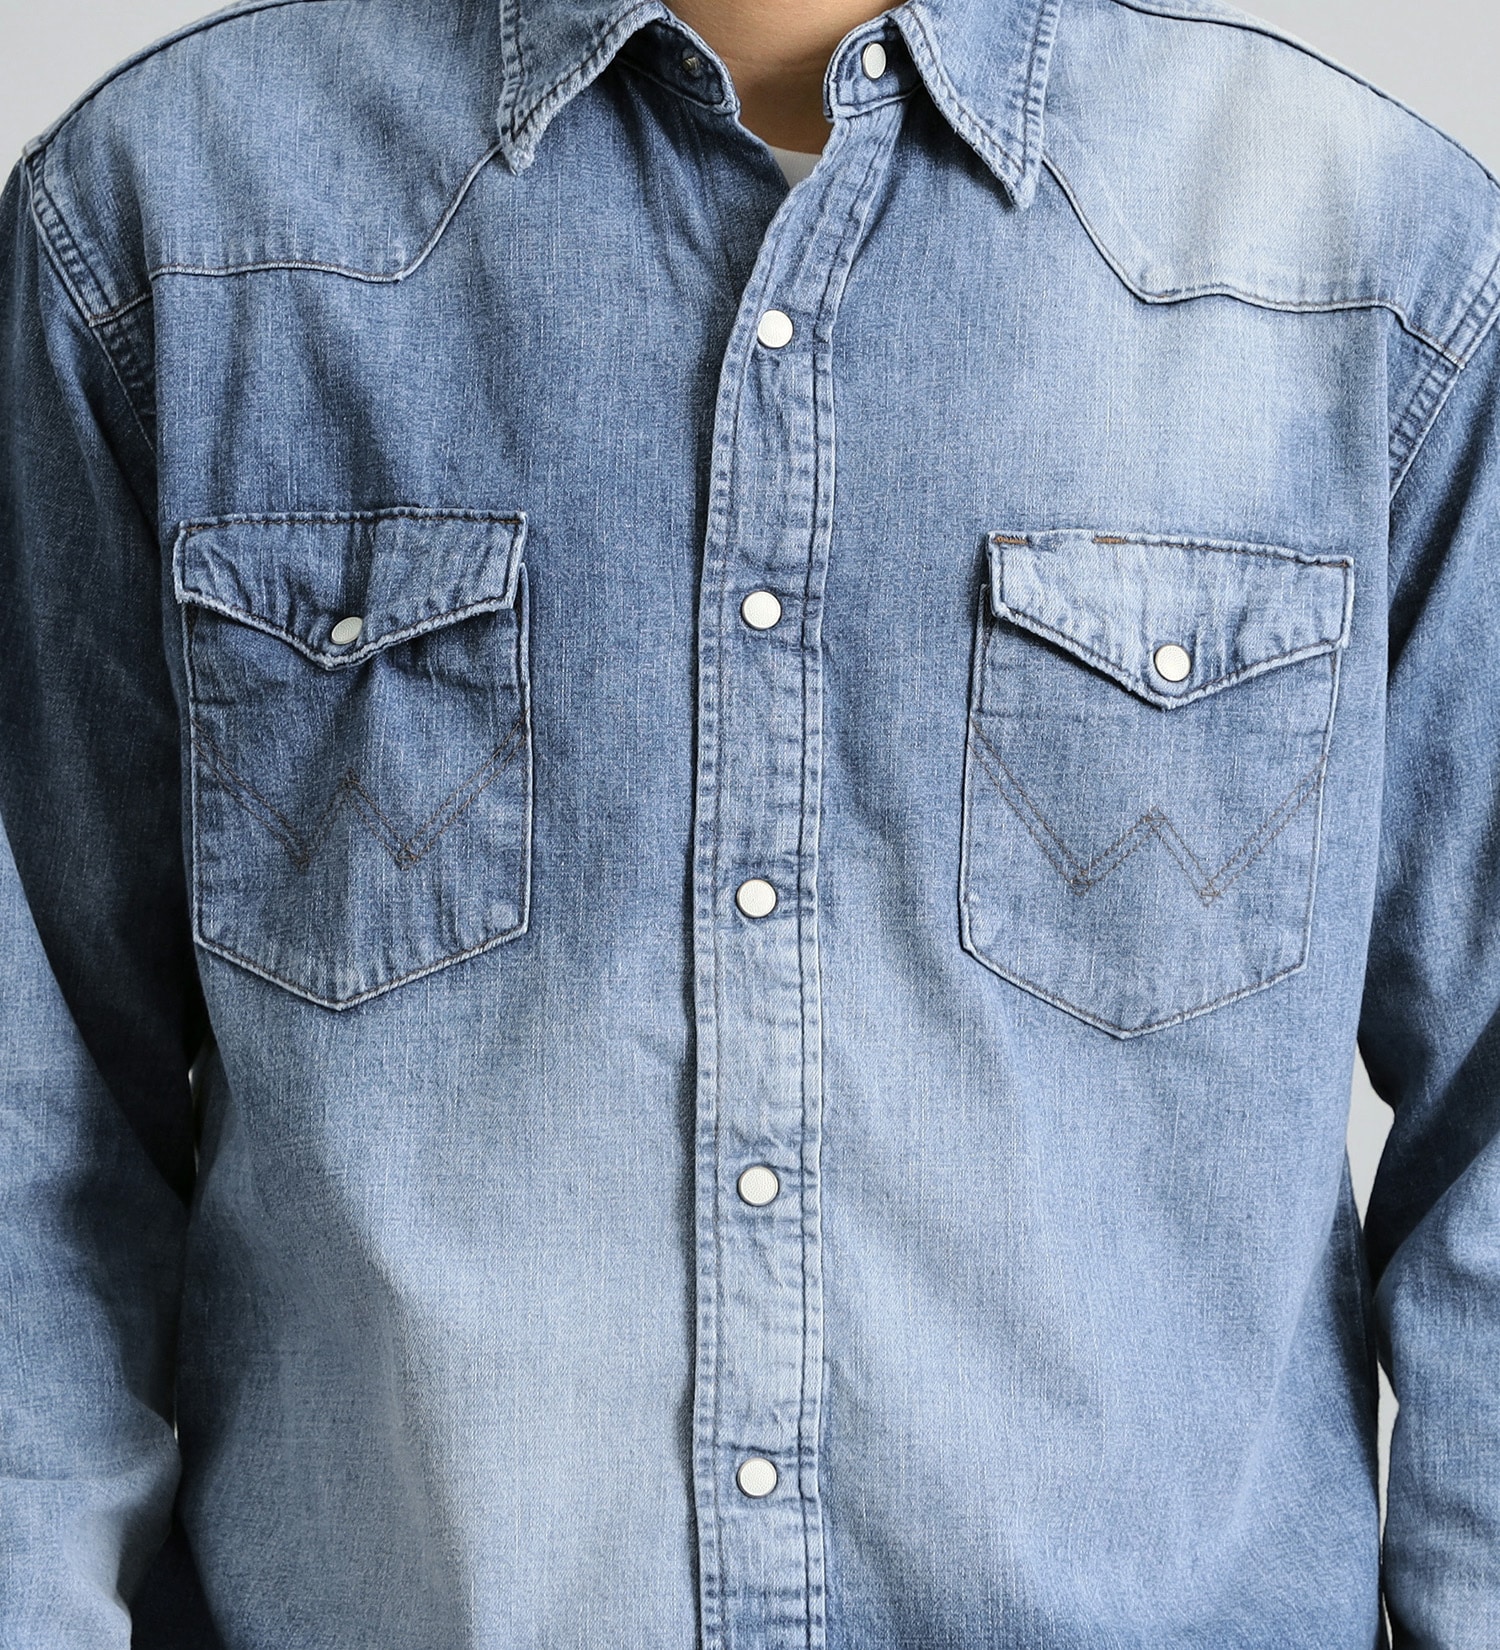 Wrangler(ラングラー)の【27MW】 Chris Ureyウエスタンシャツ|トップス/シャツ/ブラウス/メンズ|淡色ブルー